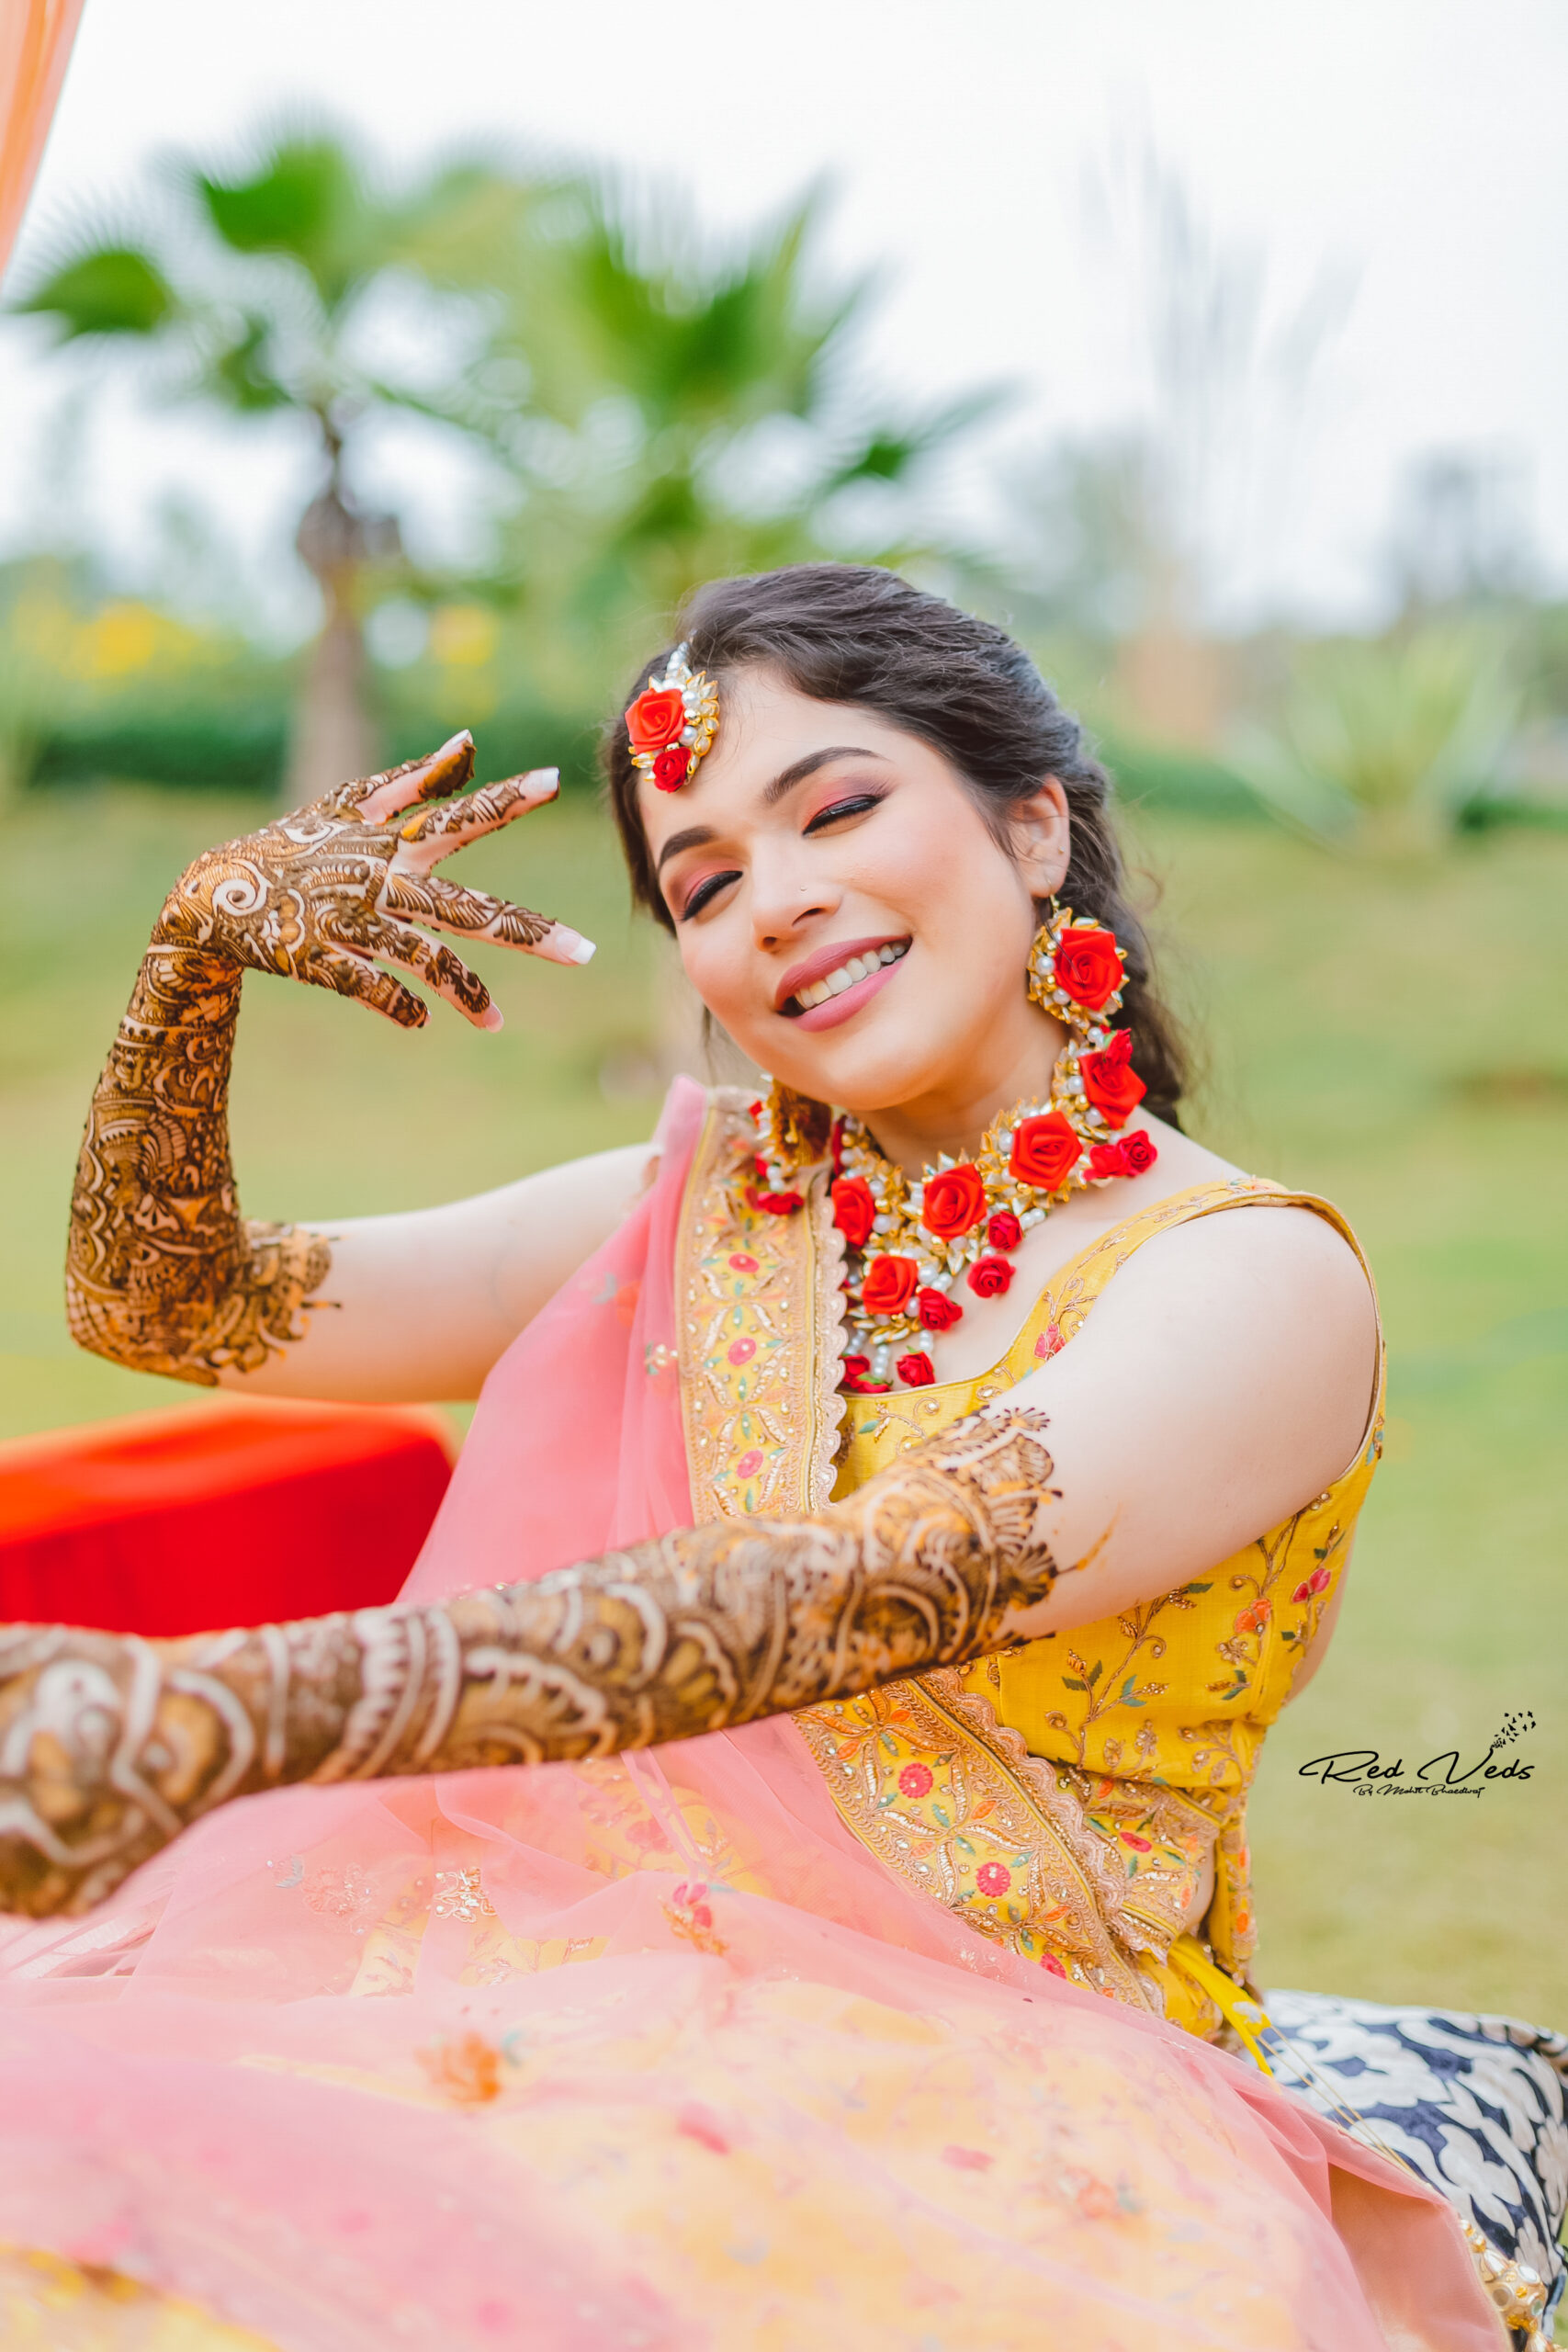 Pin by Abdellah Maliki on Visage de femme | Indian bride makeup, Indian  bride photography poses, Fashion editorial makeup